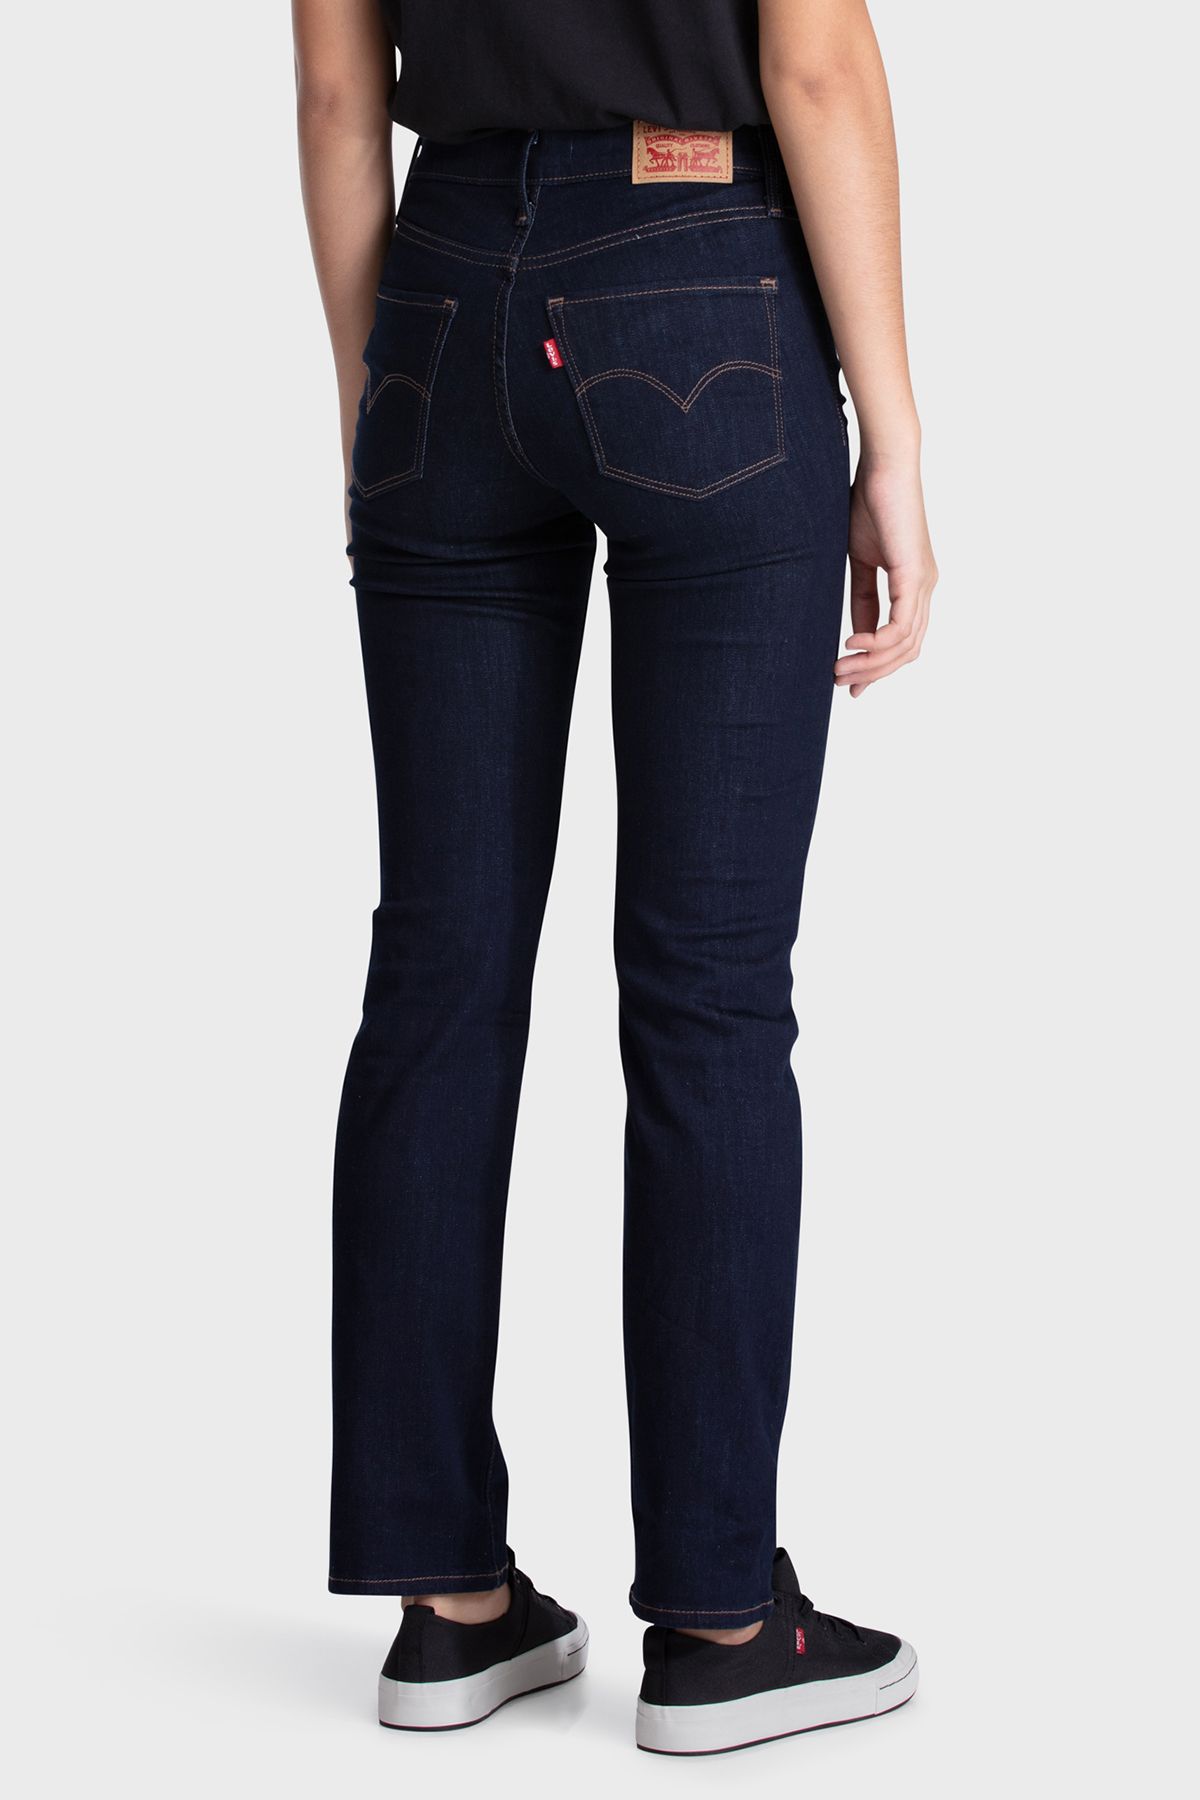 Levi's Â® 314 Shaping Straight Scenic Drive Women Jeans|akgalleria.com